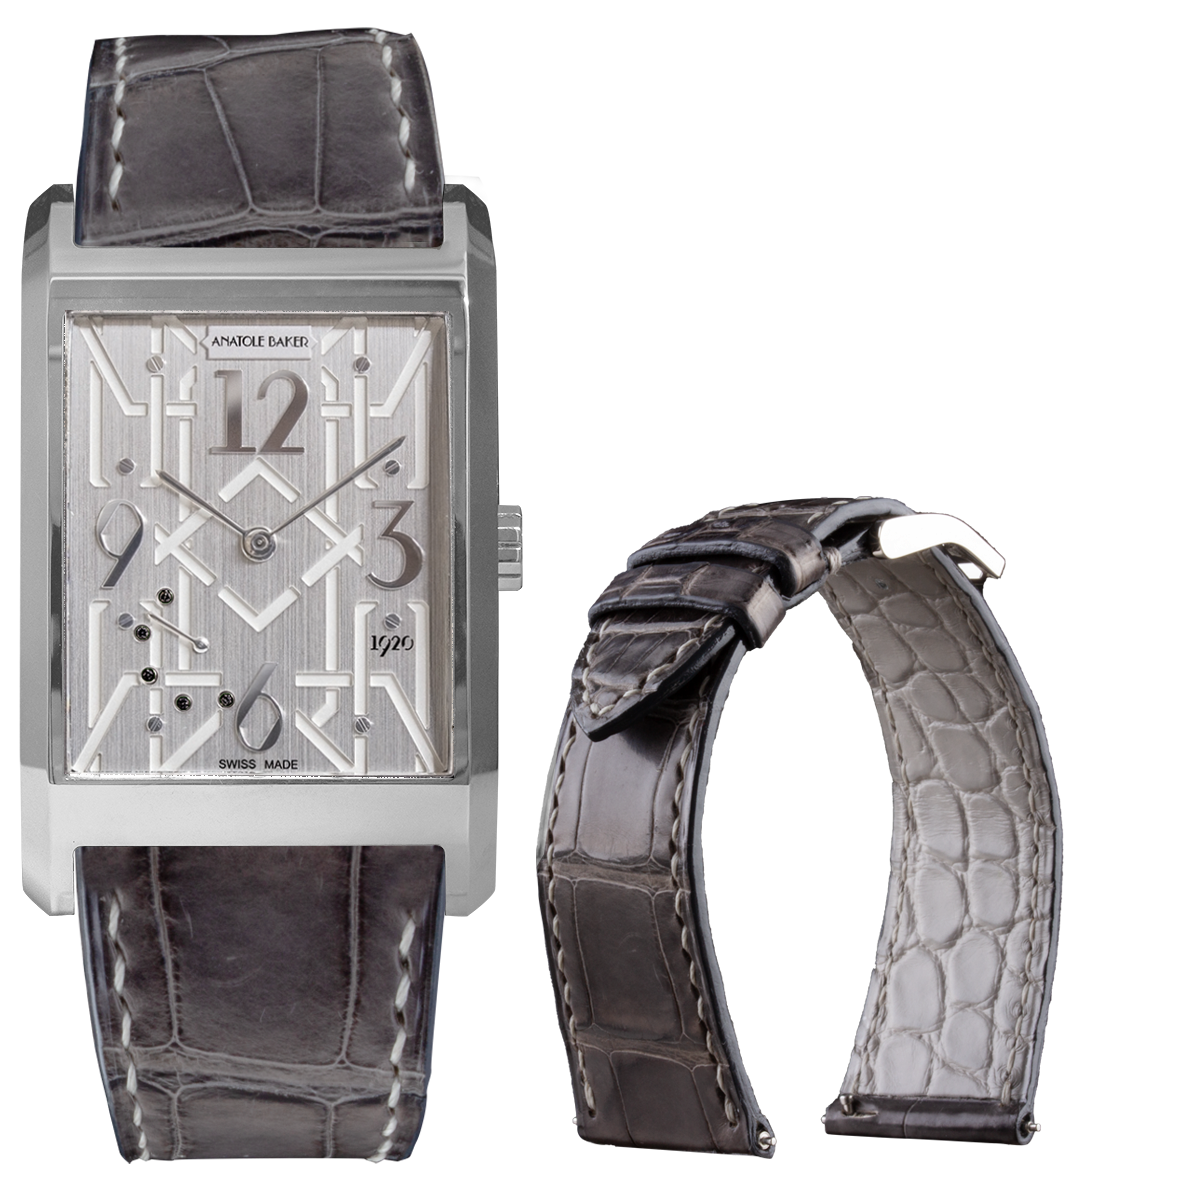 ANATOLE BAKER 1920 watch - Dandy black diamonds - Grey alligator strap